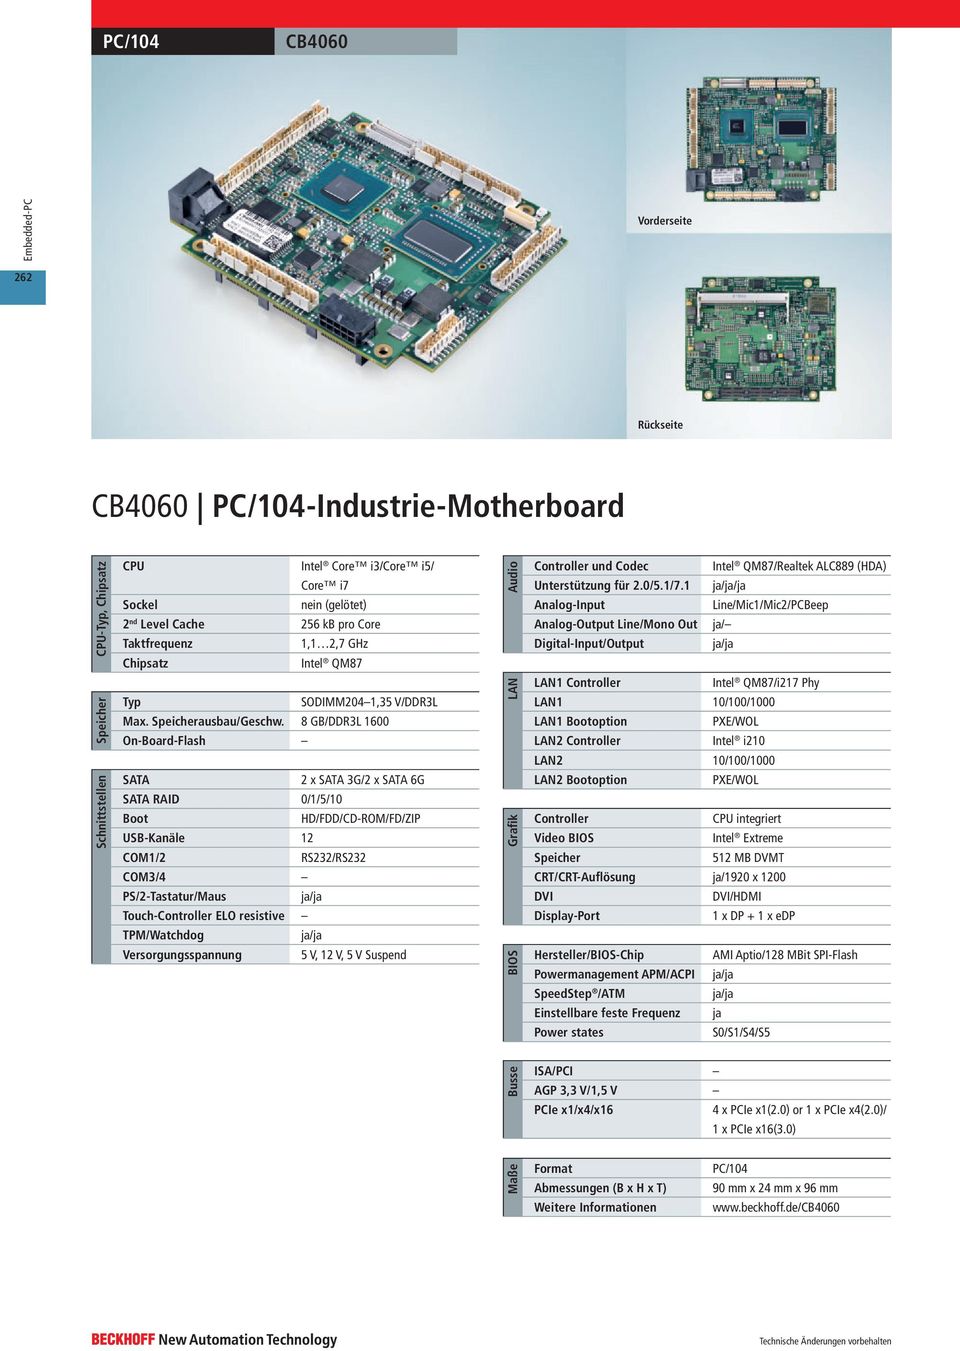 8 GB/DDR3L 1600 SATA 2 x SATA 3G/2 x SATA 6G -Kanäle 12 COM3/4 Touch- ELO resistive Versorgungsspannung 5 V, 12 V, 5 V Suspend und Codec Intel QM87/Realtek ALC889 (HDA) Unterstützung für 2.0/5.1/7.